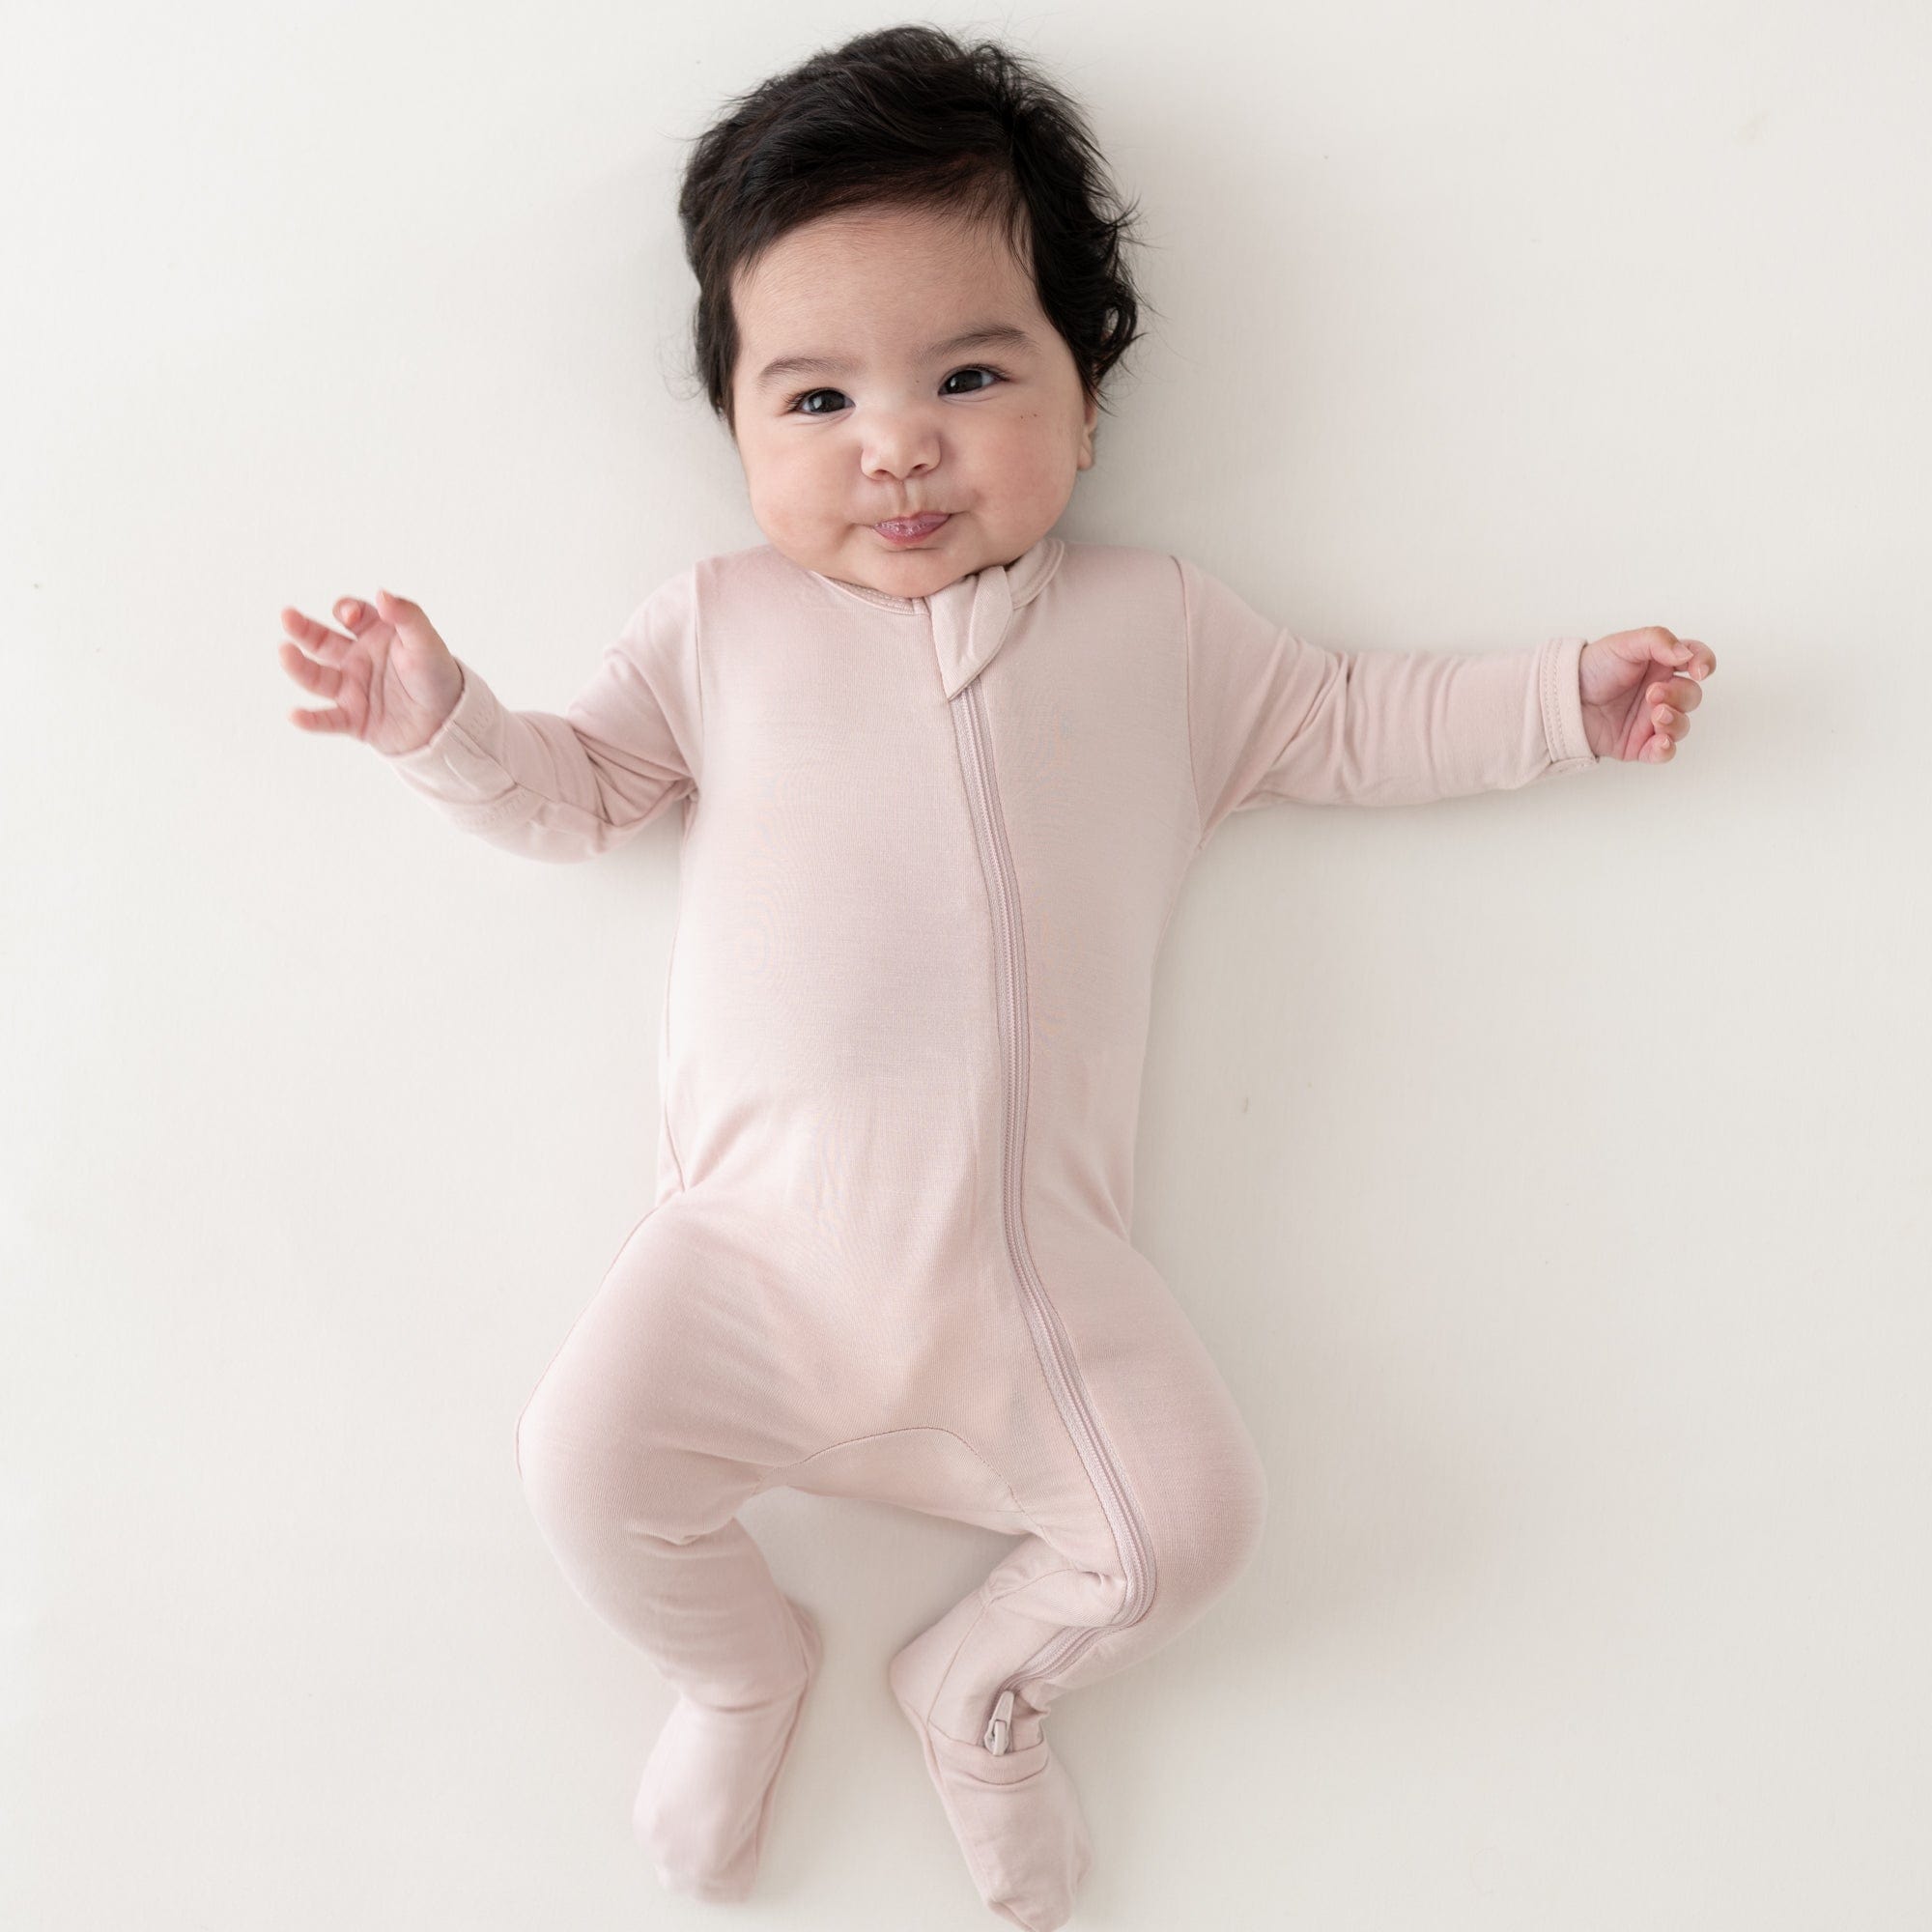 Baby wearing Kyte Baby Zippered Footie pajama in Blush pink